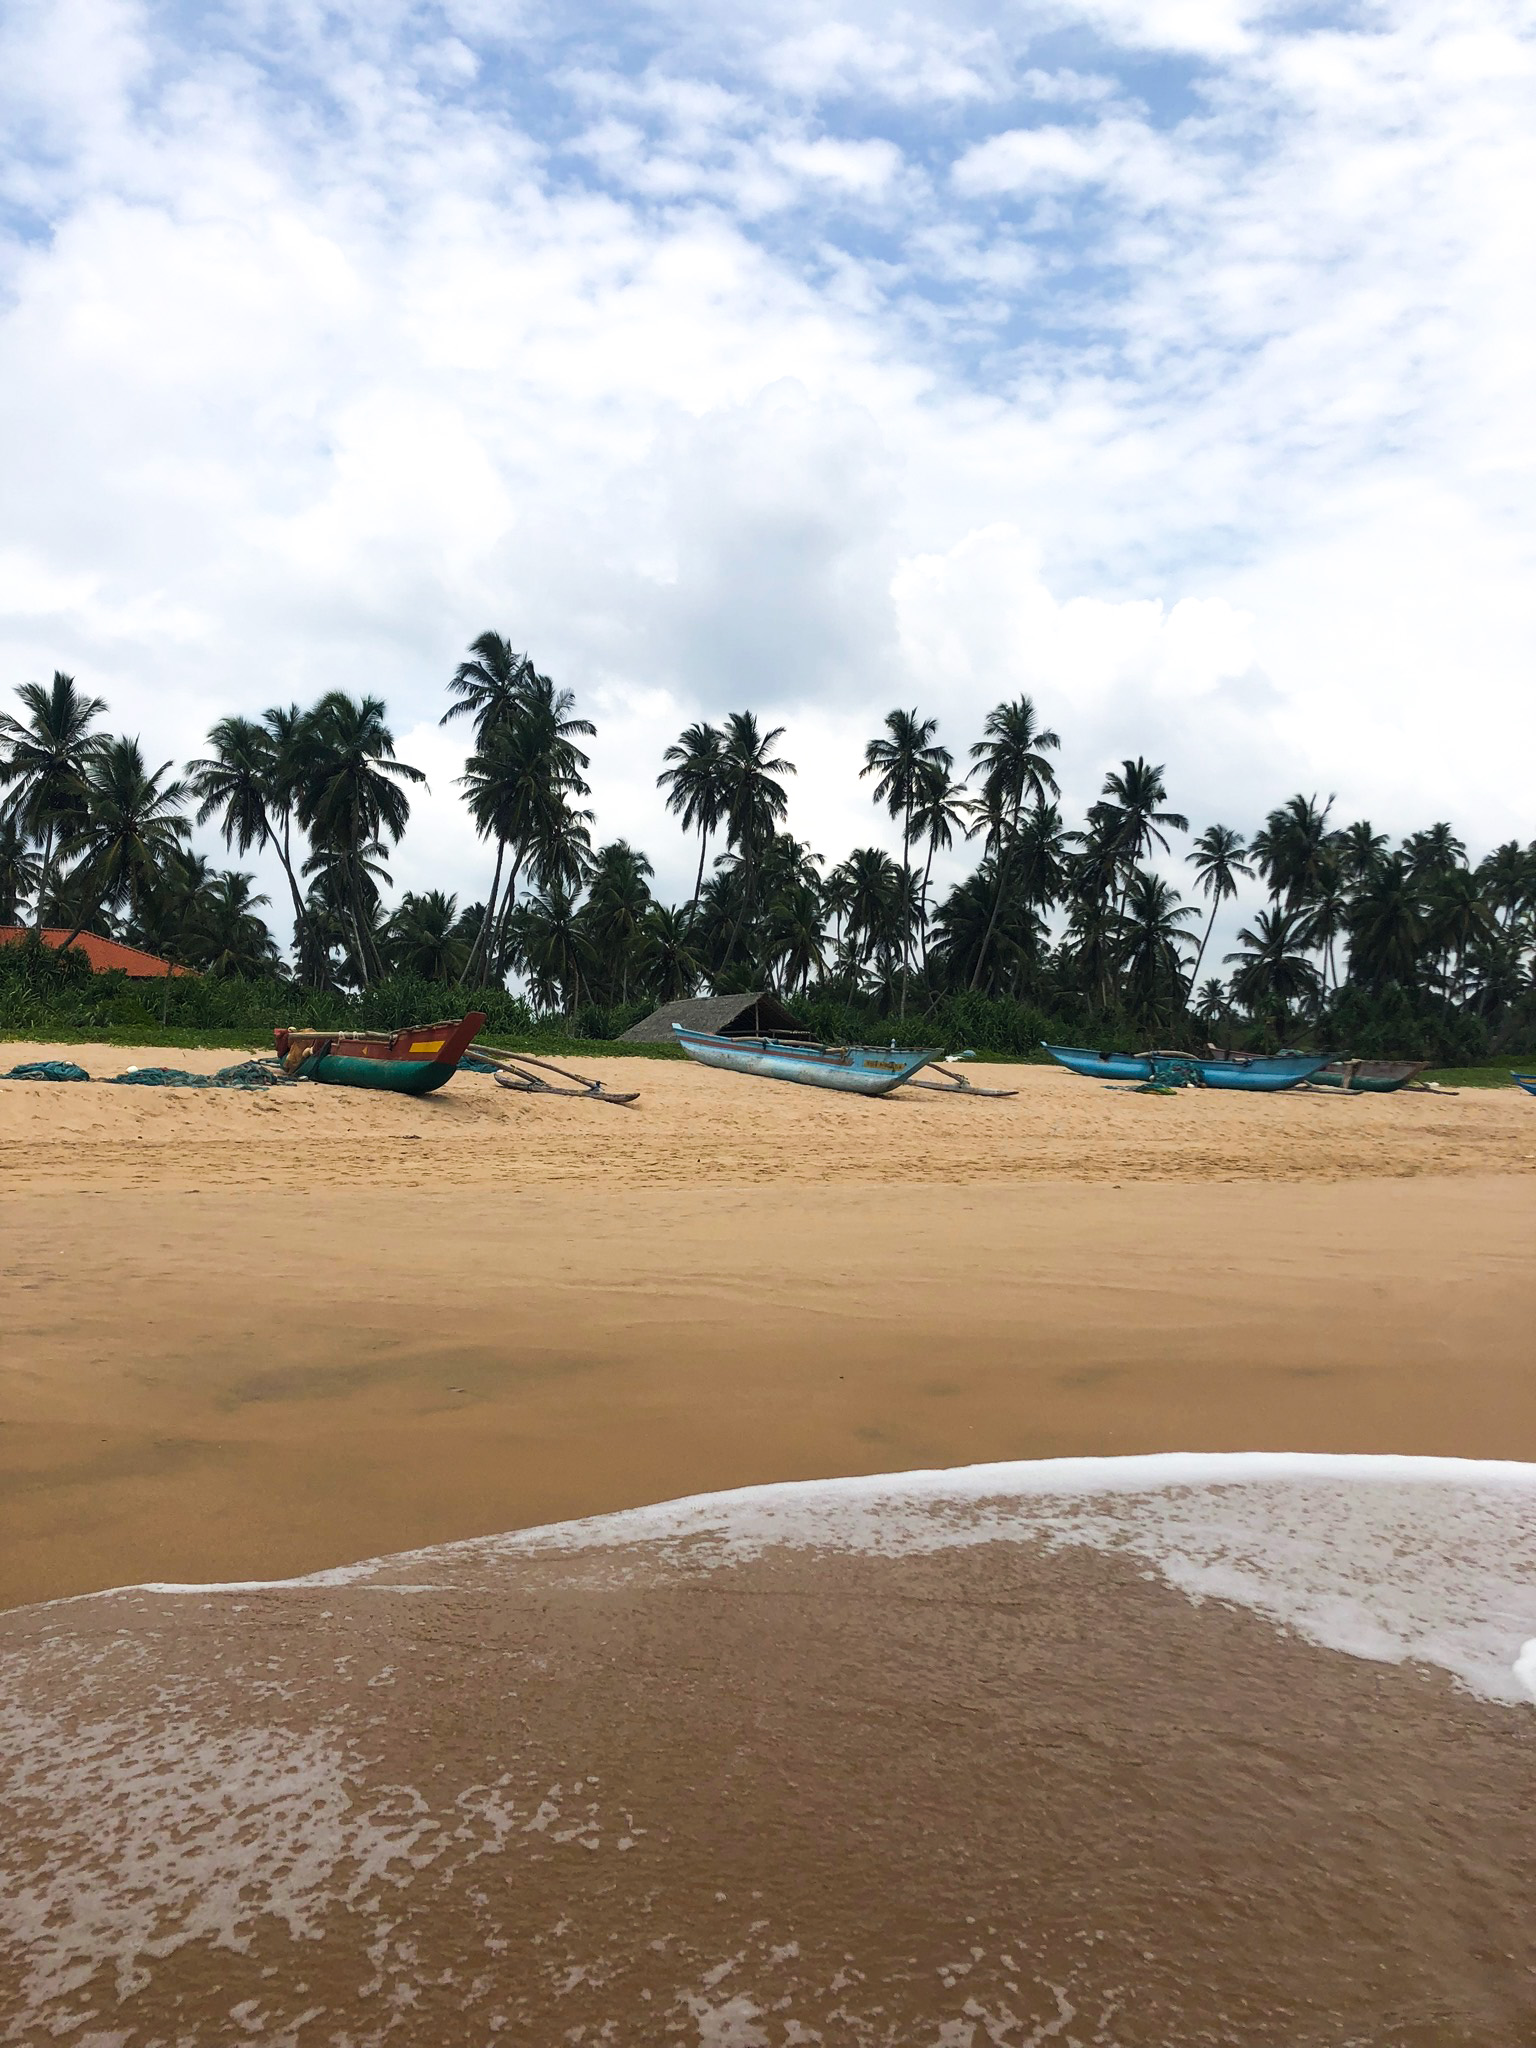 Tangalle Traumstrand Strand Good Karma beste Strände Tipp Sri Lanka Reiseroute 3 Wochen Rundreise Sri Lanka Süden Reiseblog Tipps